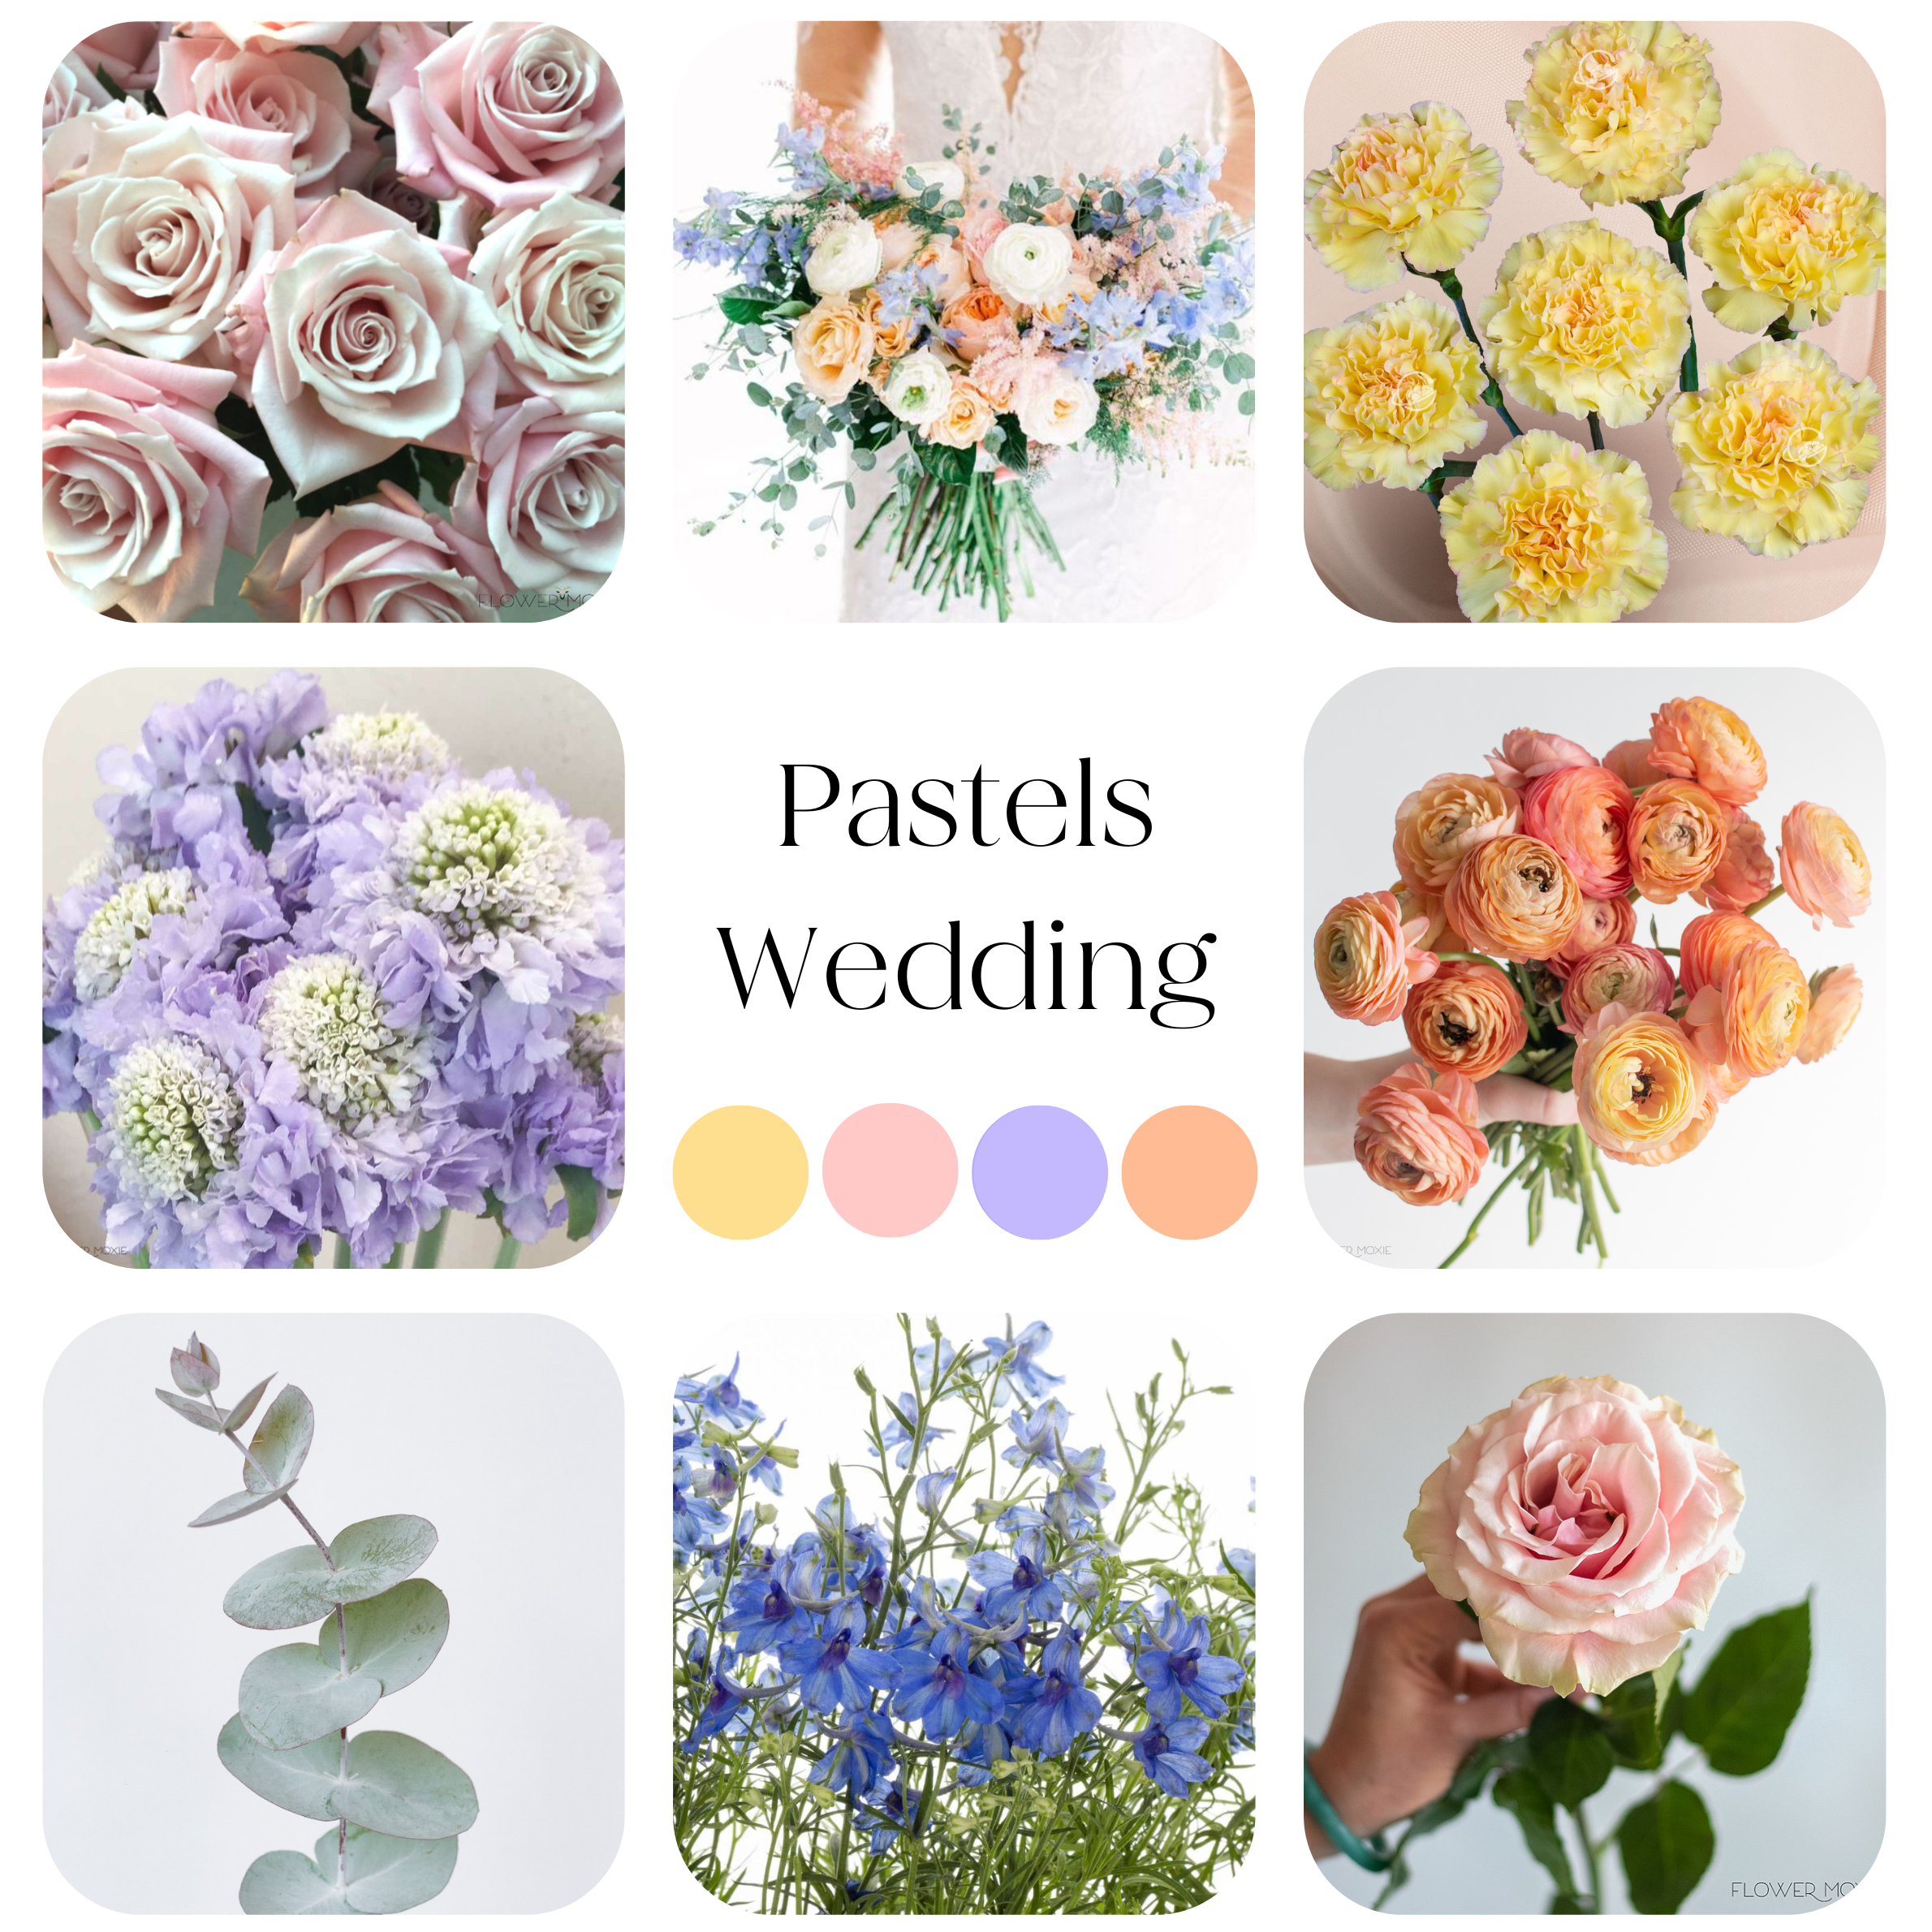 pastels palette diy wedding flowers kit